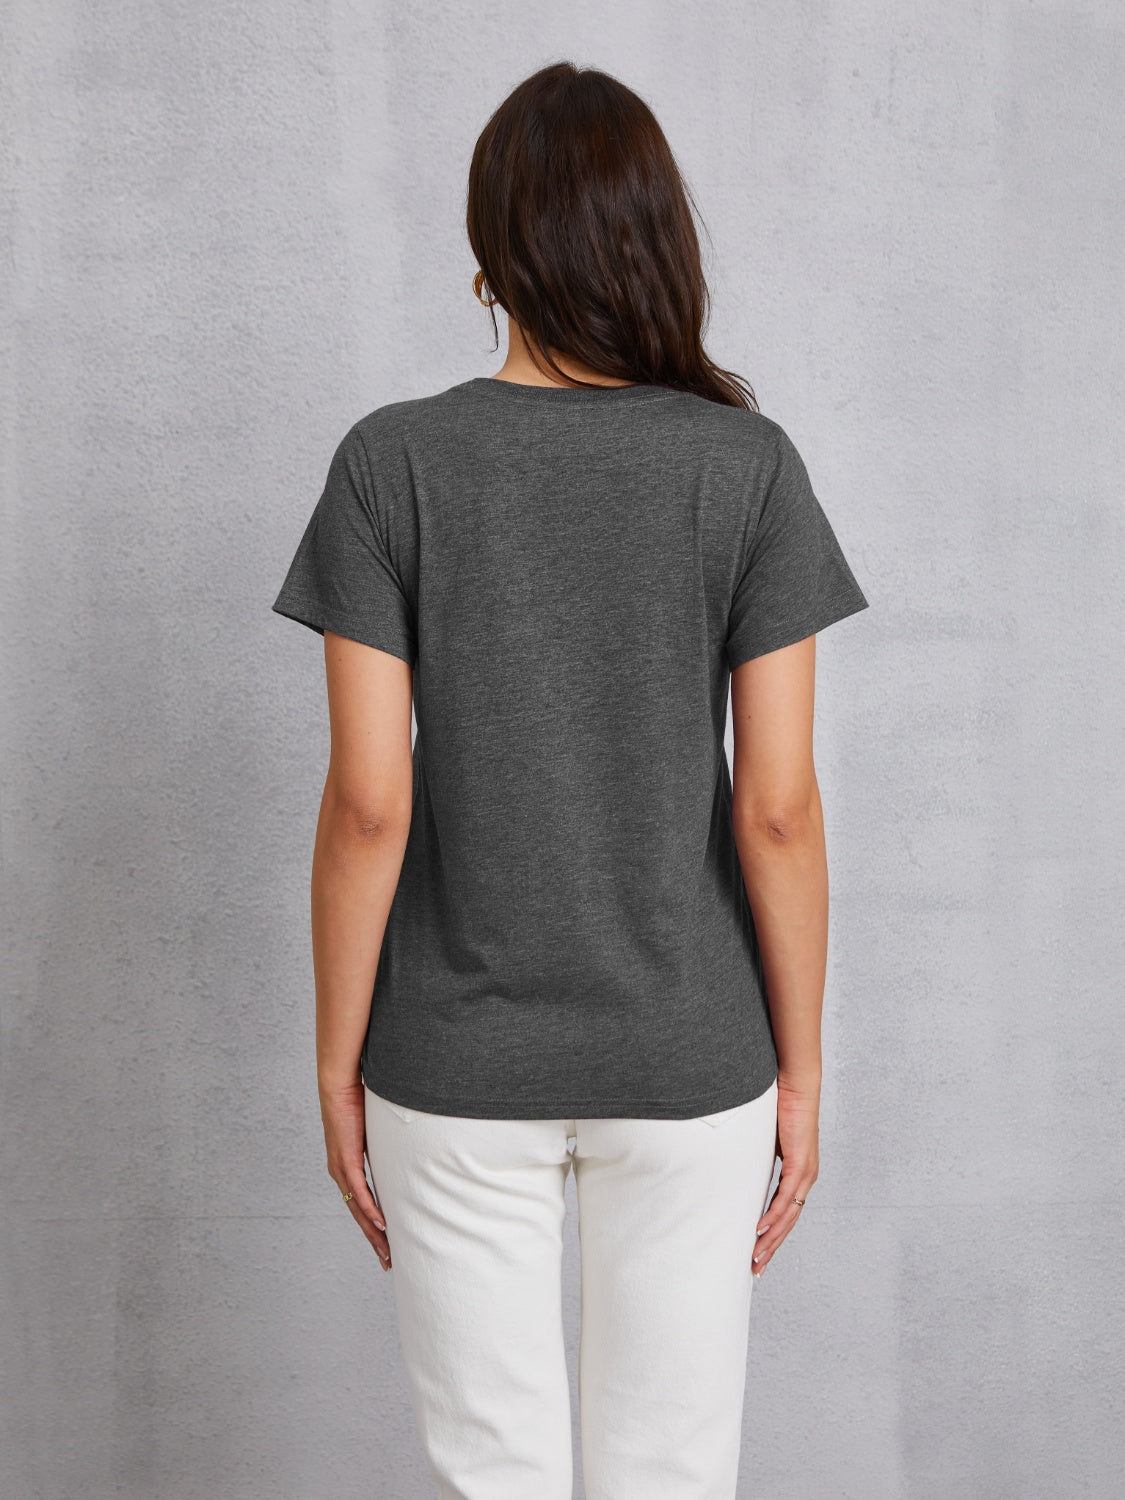 Women Cat Graphic Round Neck Short Sleeve T-Shirt